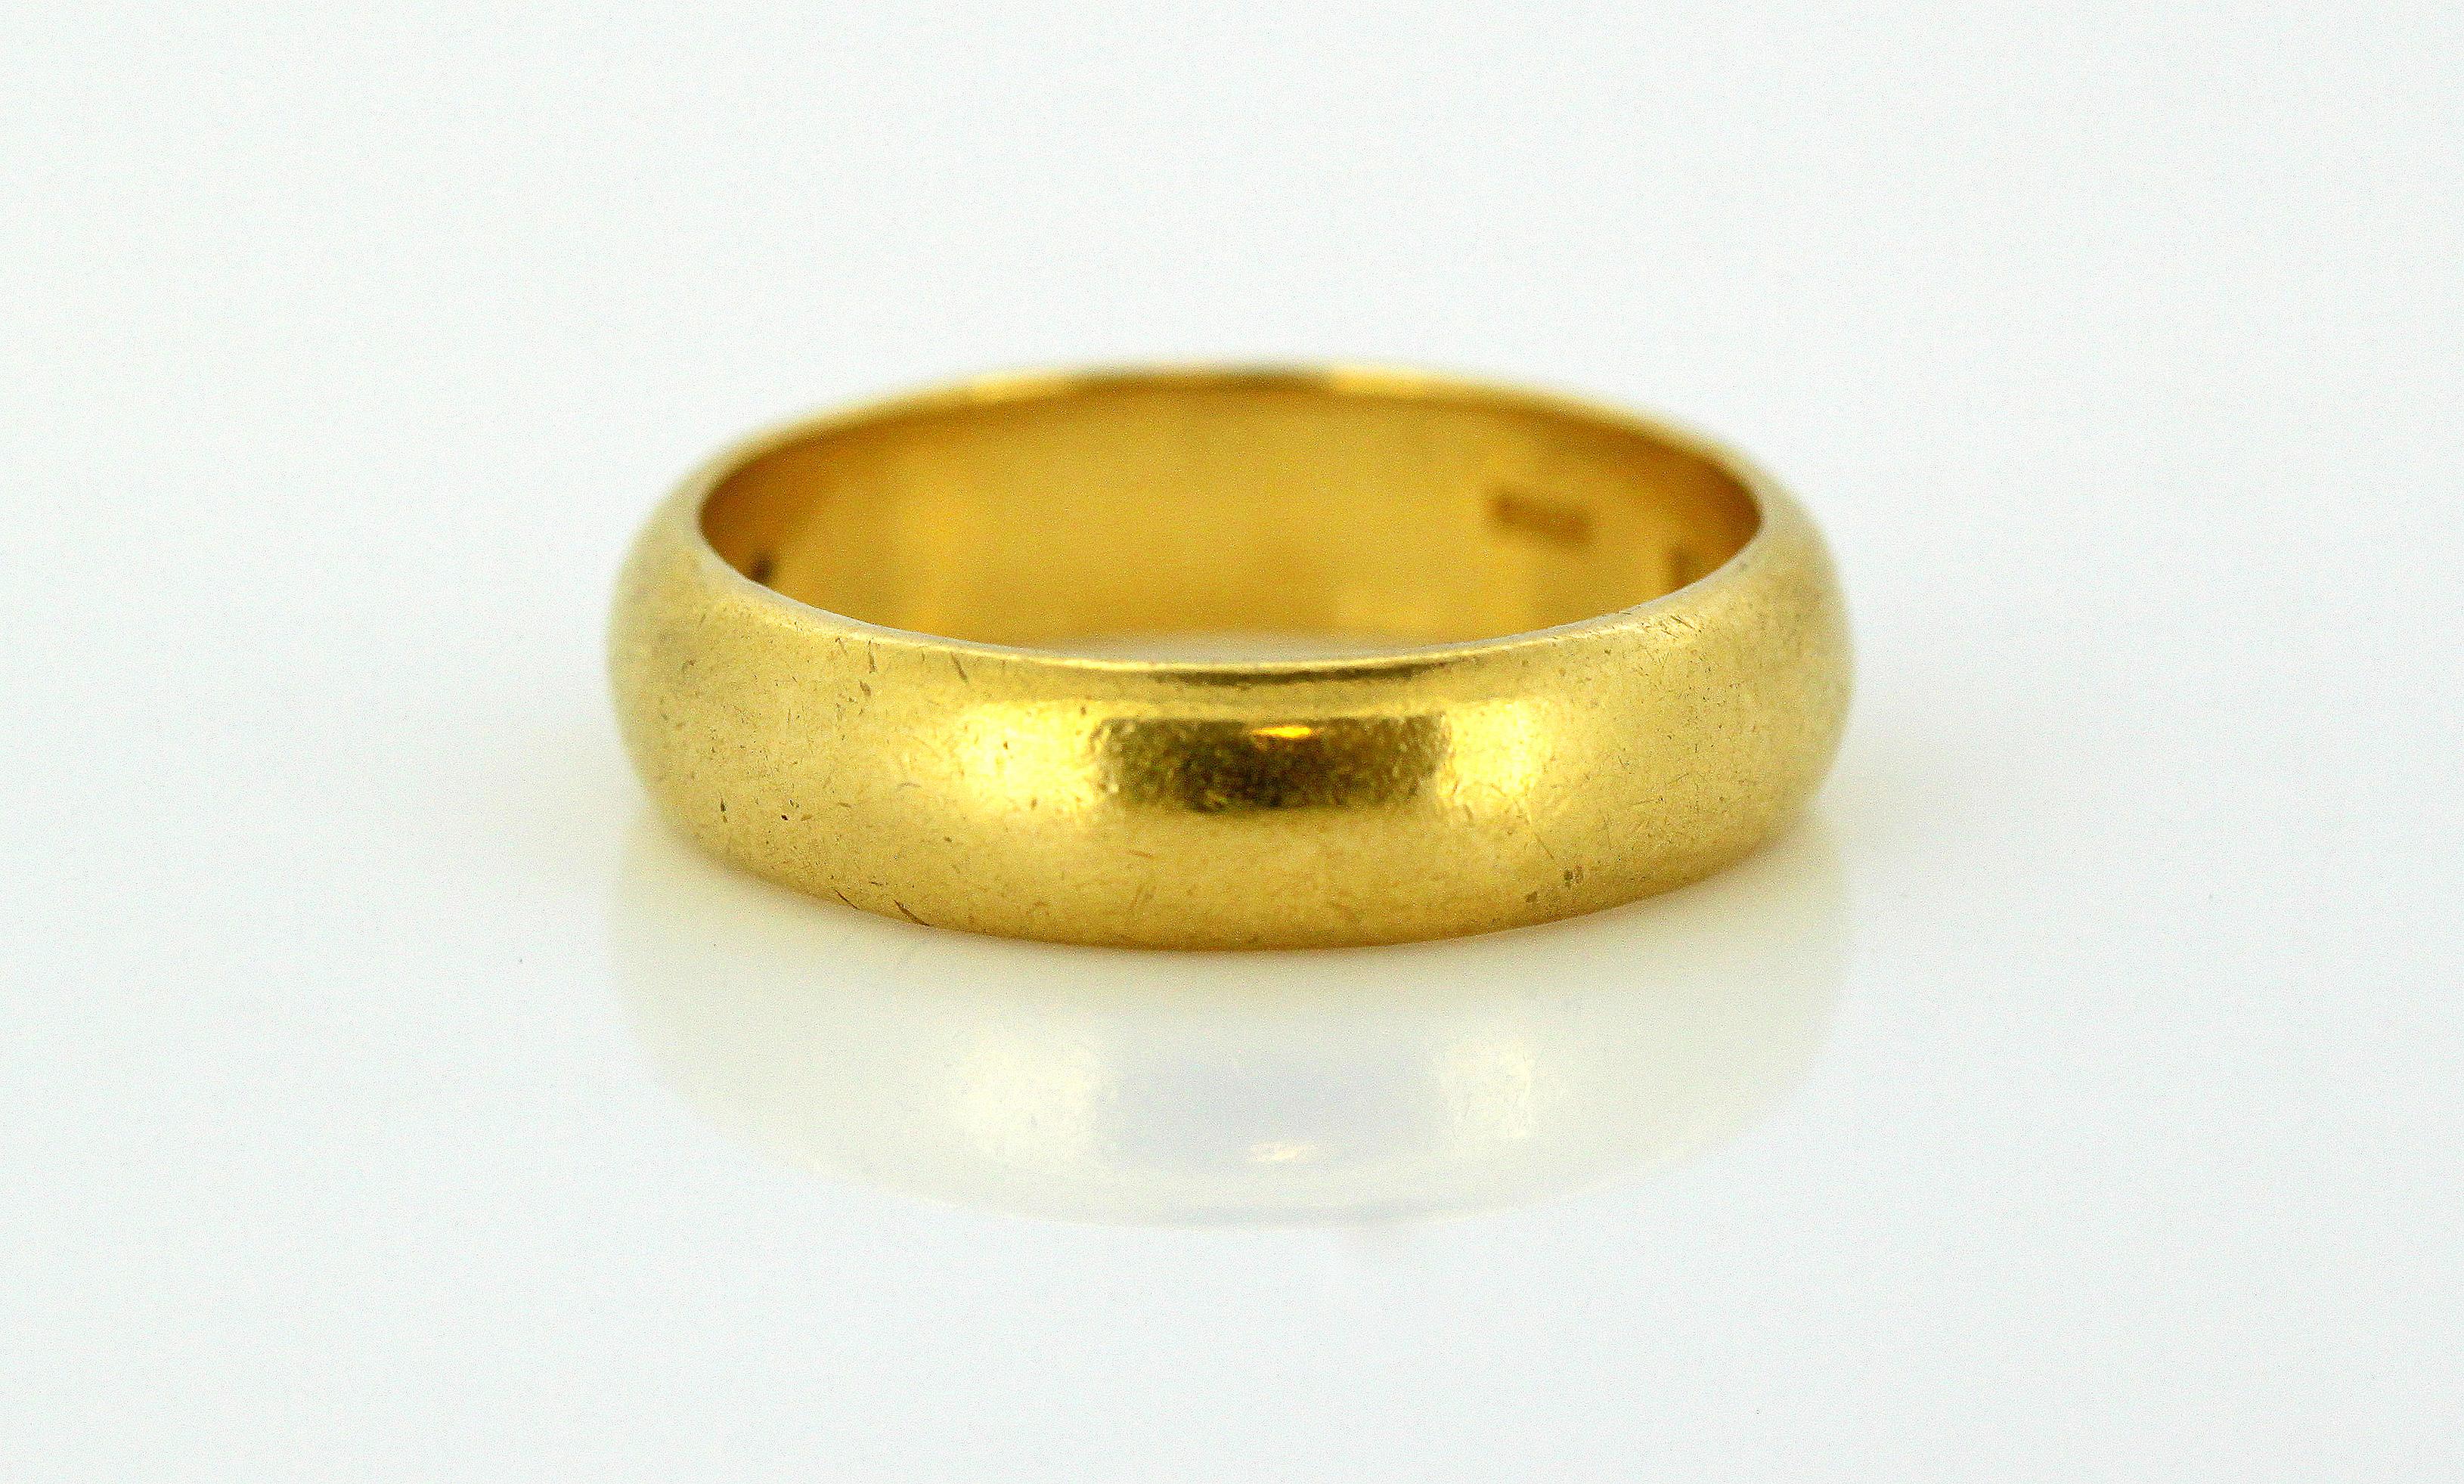 Russian 23kt yellow gold men's wedding ring band.
Hallmarked 958 - 28kt gold & Russian hallmarked.
Made in Russia Circa 1940's

Dimensions -
Diameter x Width : 2.4 x 0.5 cm
Finger Size : (UK) = U (US) = 10 1/4 (EU) = 62 1/2
Weight: 10 g